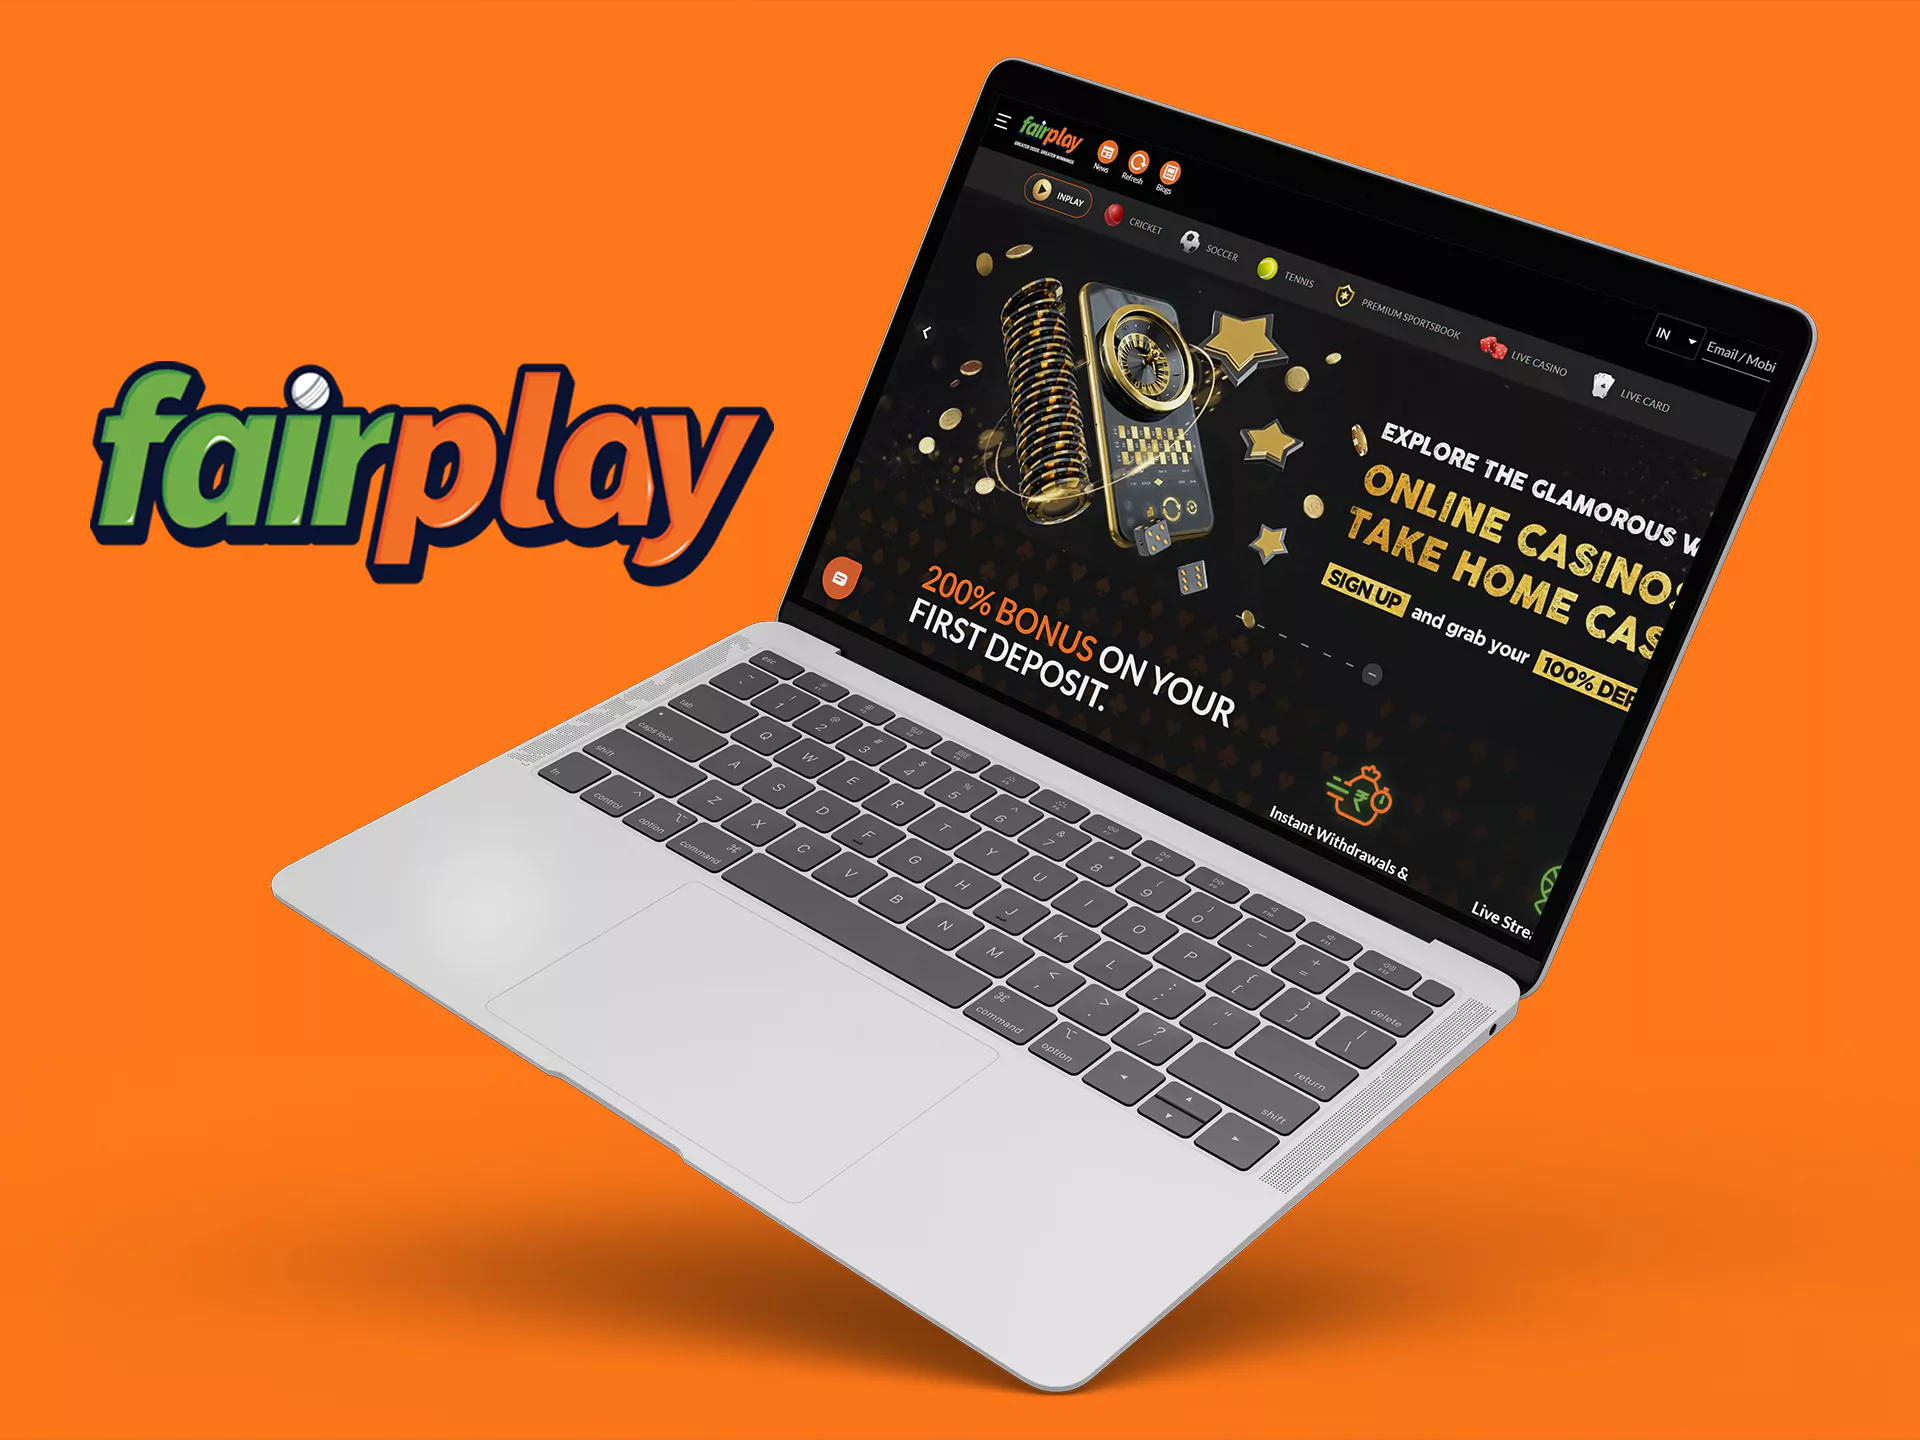 Fairplay has a official website.